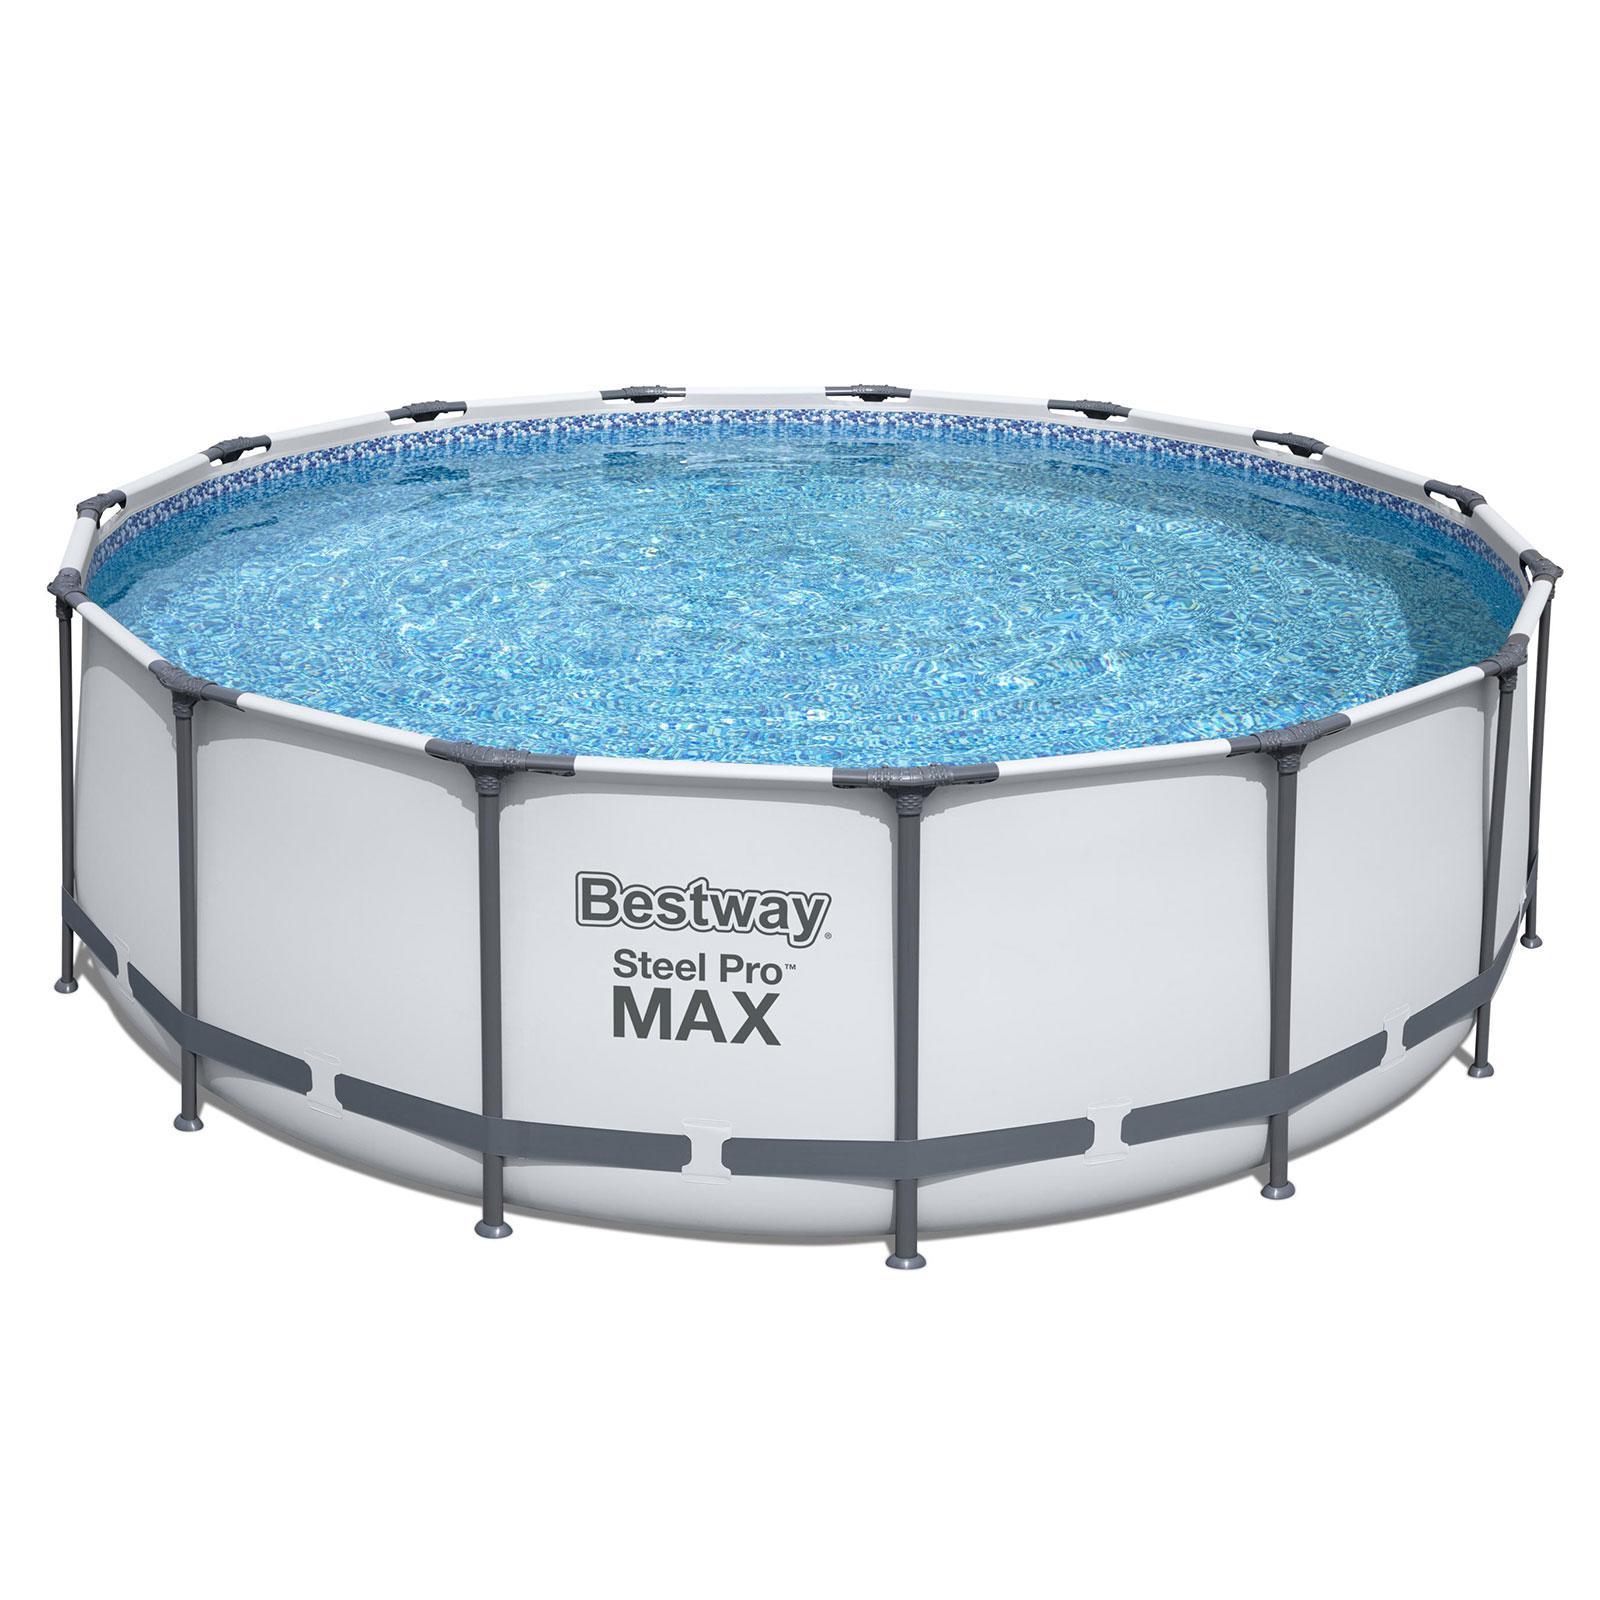 Bestway 4.57m x 1.22m Steel Pro MAX Frame Pool with 800gal Cartridge Filter Pump - 56439